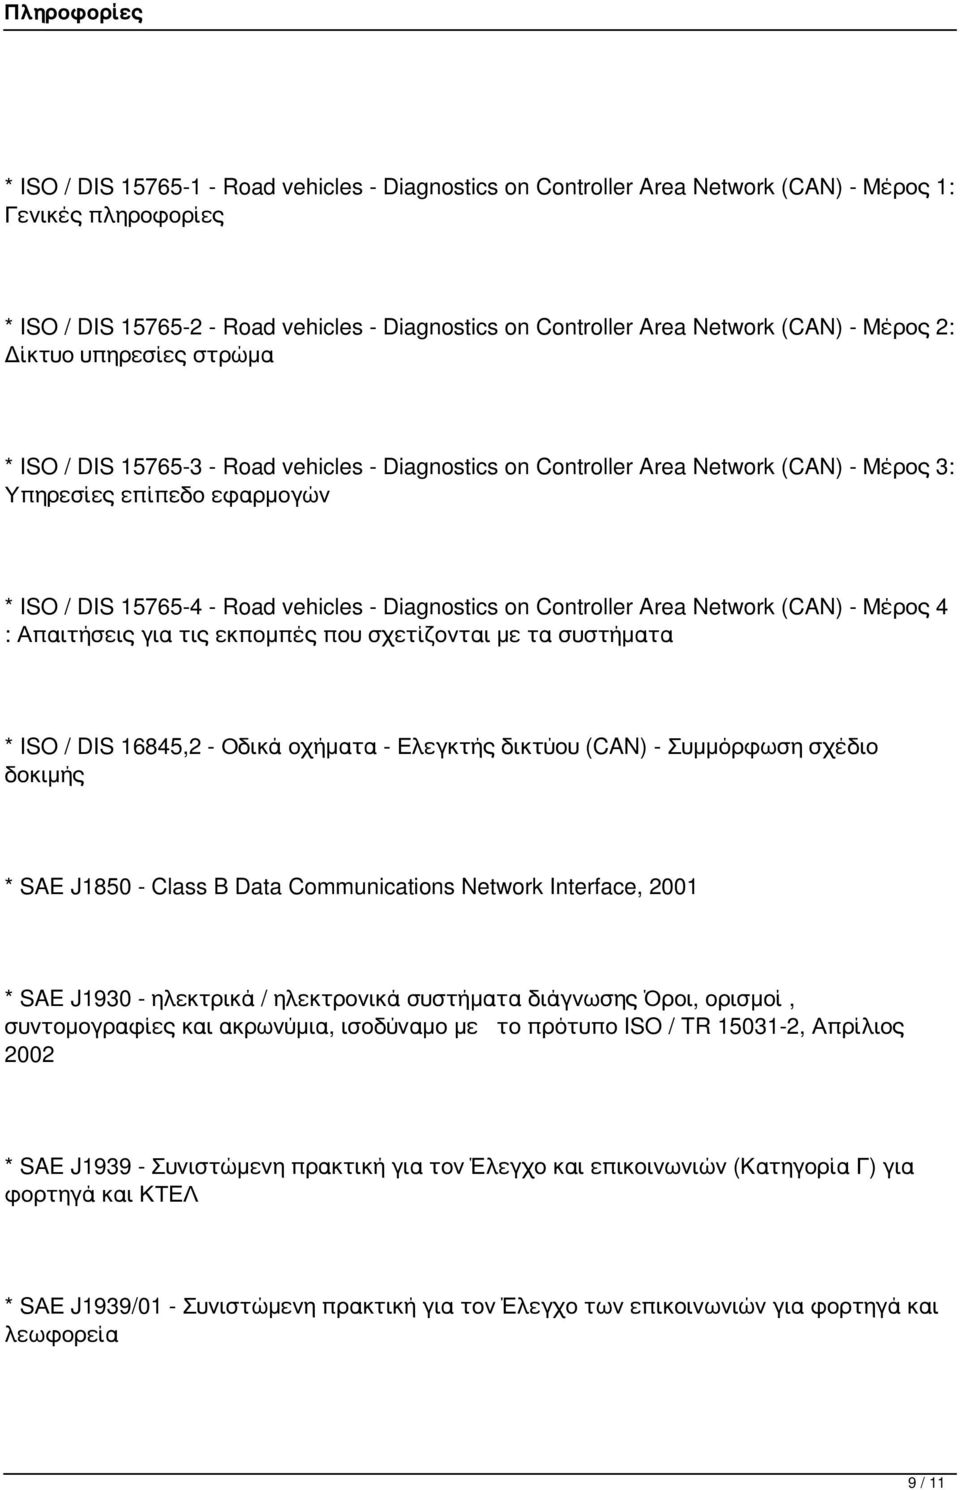 Diagnostics on Controller Area Network (CAN) - Μέρος 4 : Απαιτήσεις για τις εκπομπές που σχετίζονται με τα συστήματα * ISO / DIS 16845,2 - Οδικά οχήματα - Ελεγκτής δικτύου (CAN) - Συμμόρφωση σχέδιο